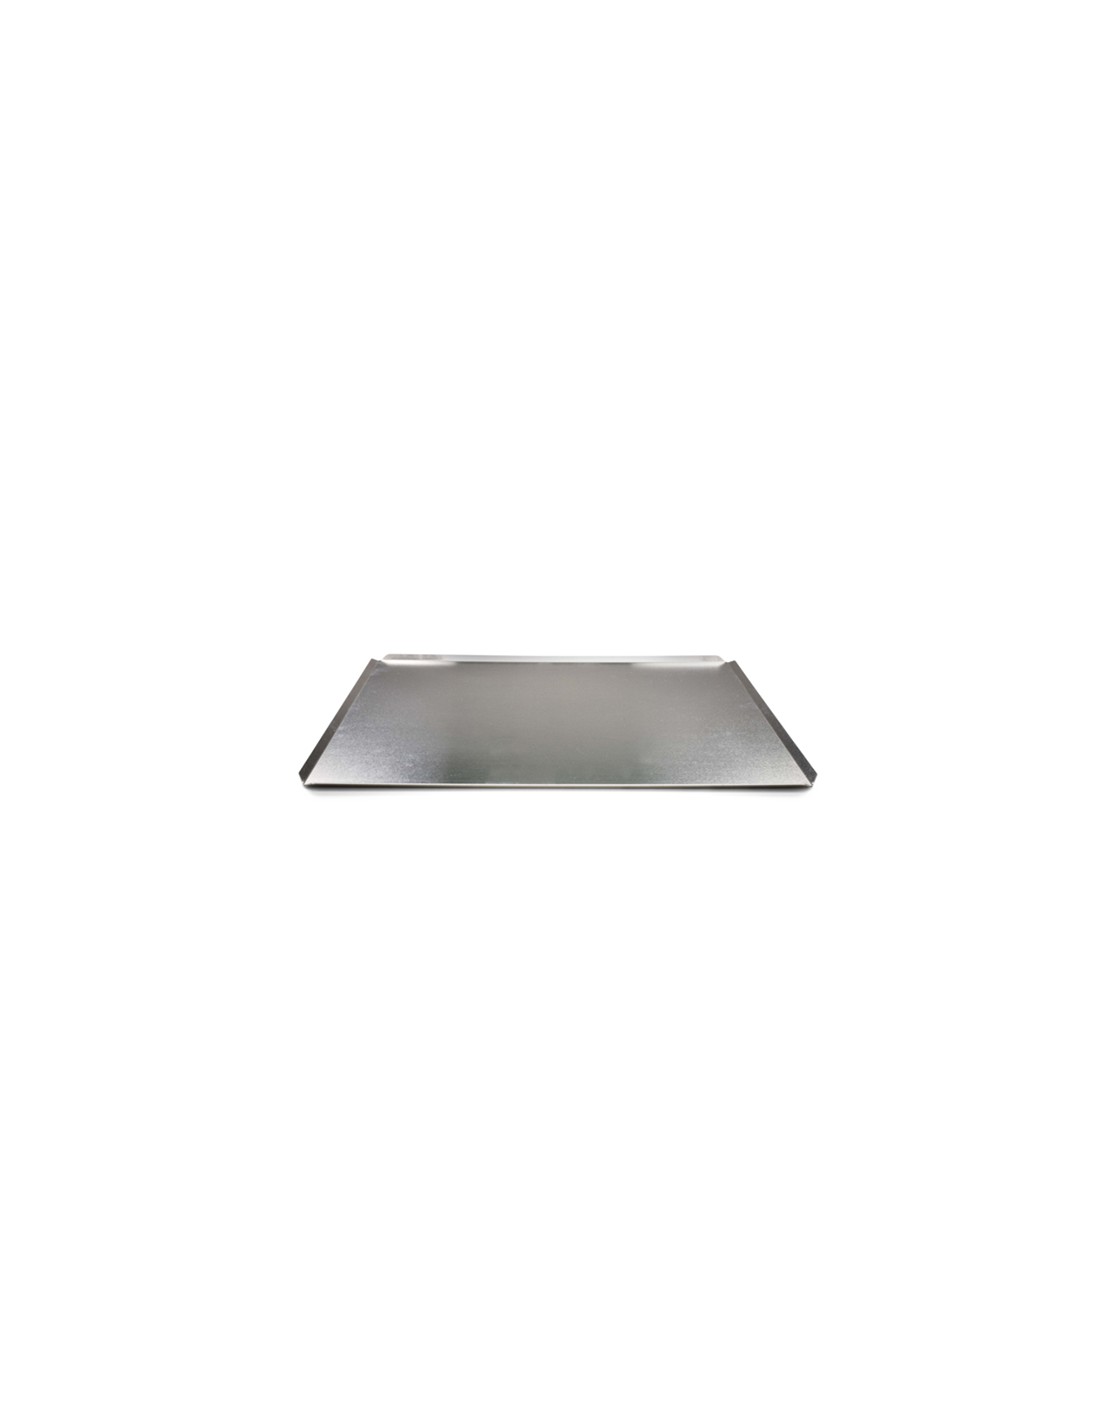 Tamaño del marco de aluminio cm 48 x 34,5 x 0,8 h